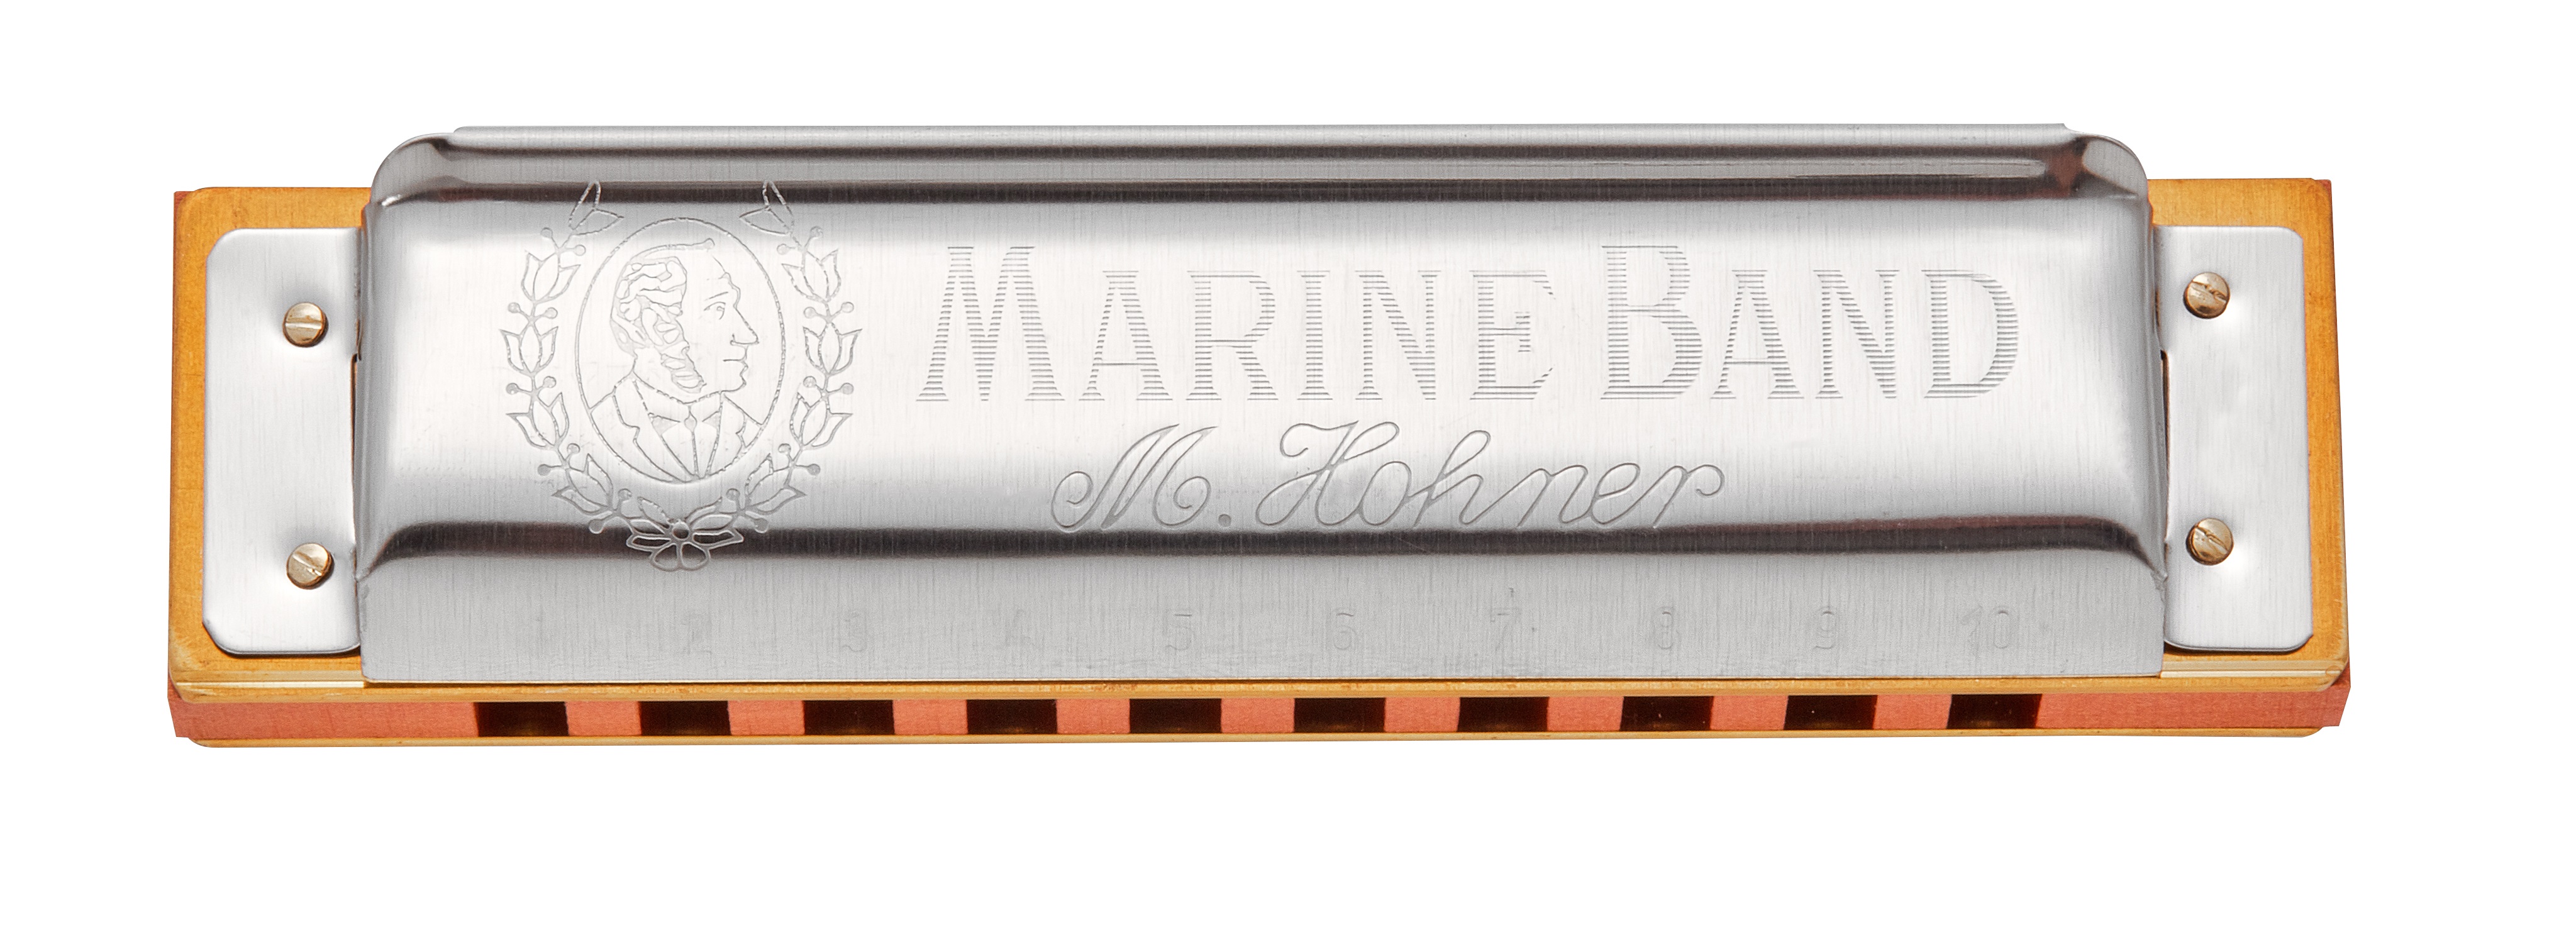 Fotografie Hohner Marine Band 1896 Ladění: A Hohner A130:13139_5465